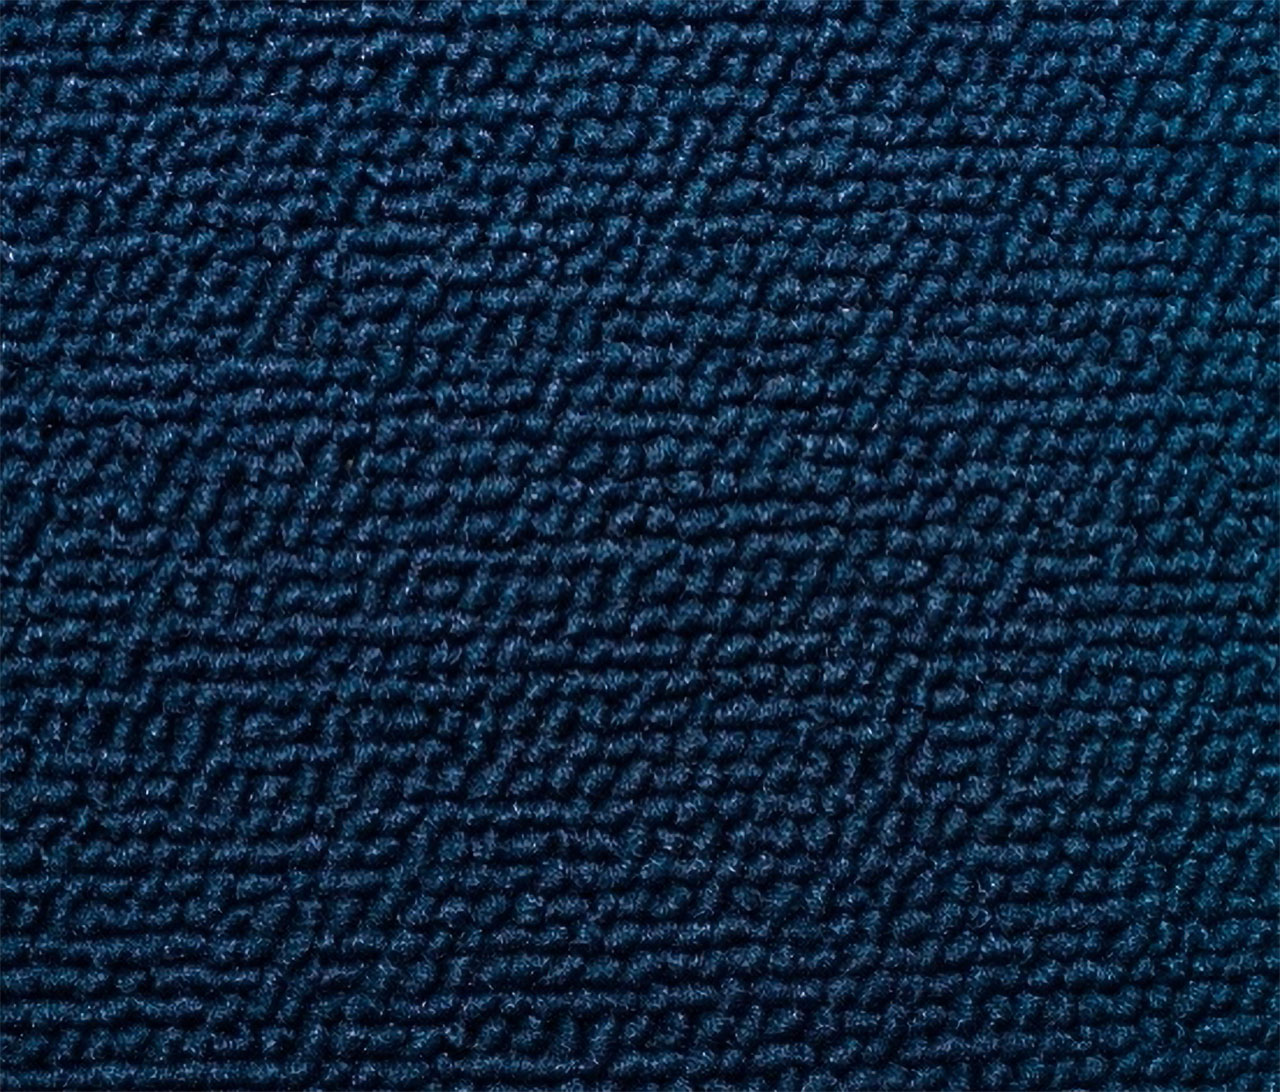 Valiant Regal VC Valiant V8 Wagon B1 Blue Carpet (Image 1 of 1)